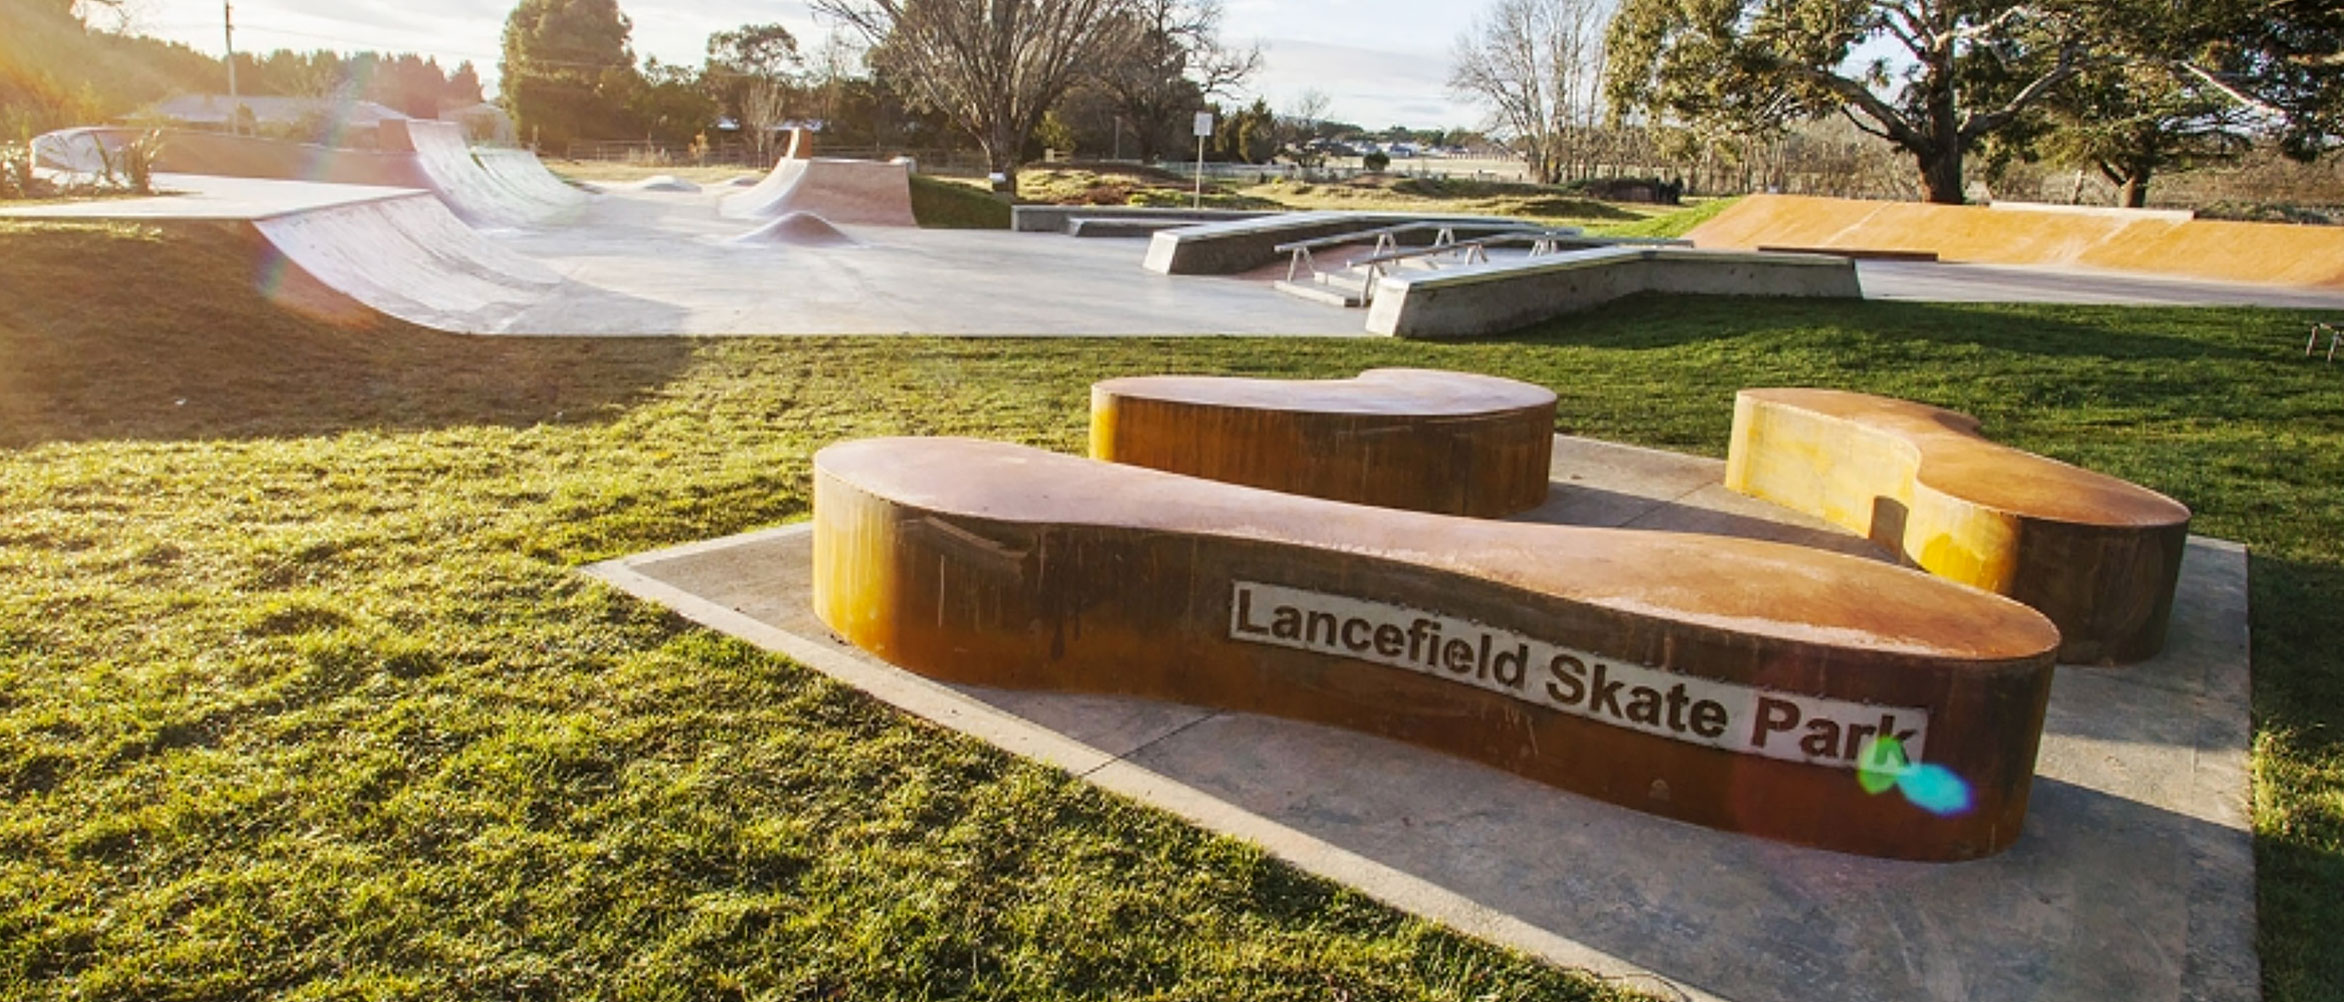 Lancefield skate park art